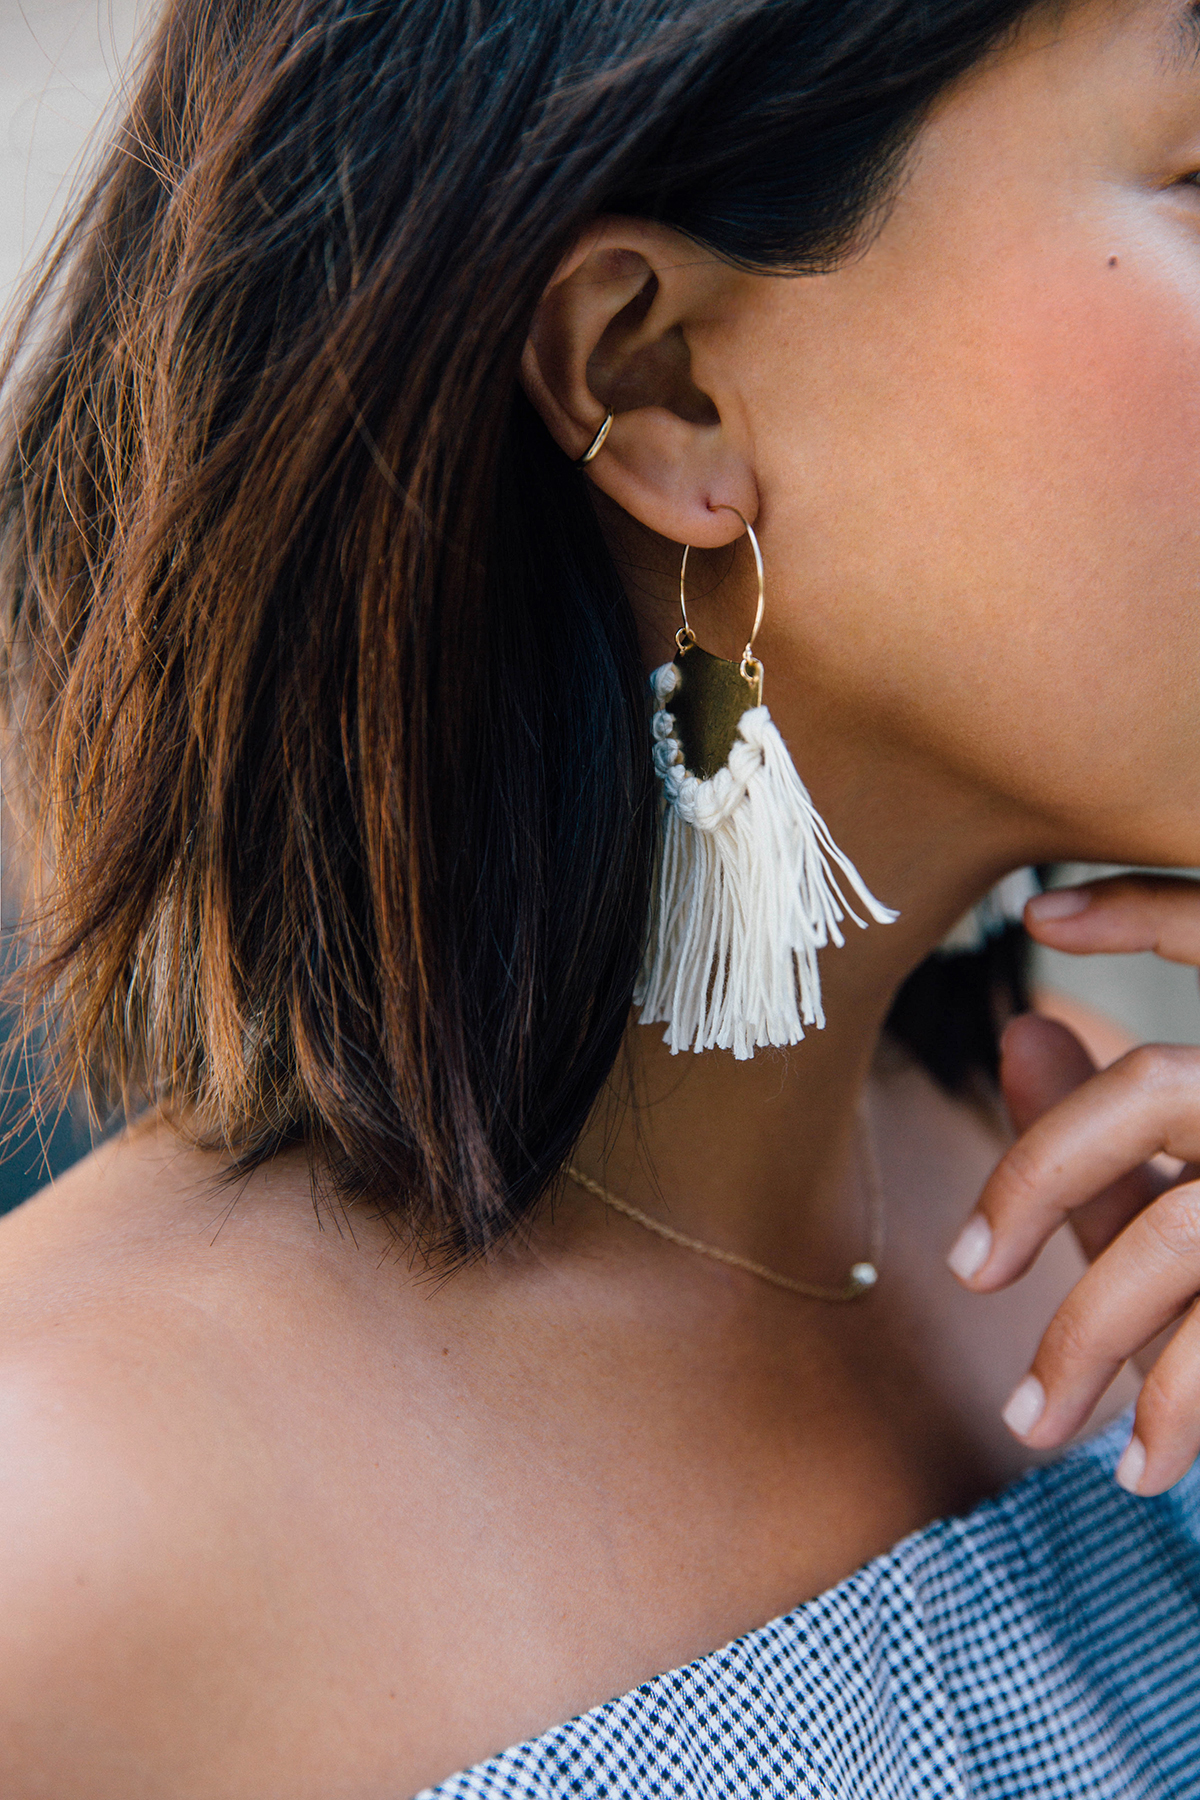 12 stylish DIY earrings to make